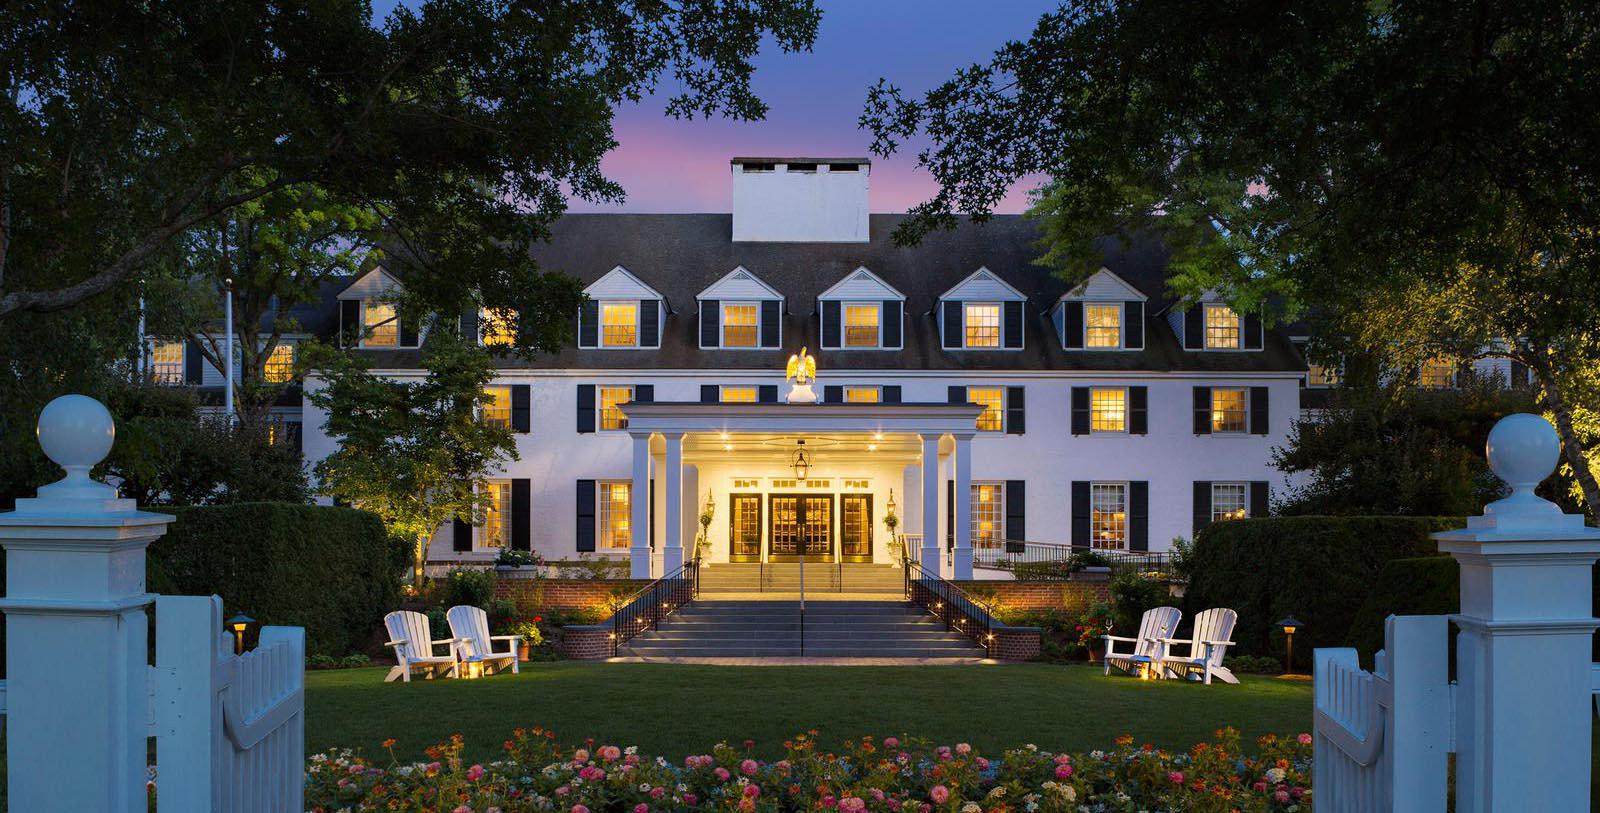 Image of hotel exterior Woodstock Inn & Resort, 1793, Member of Historic Hotels of America, in Woodstock, Vermont, Overview Video